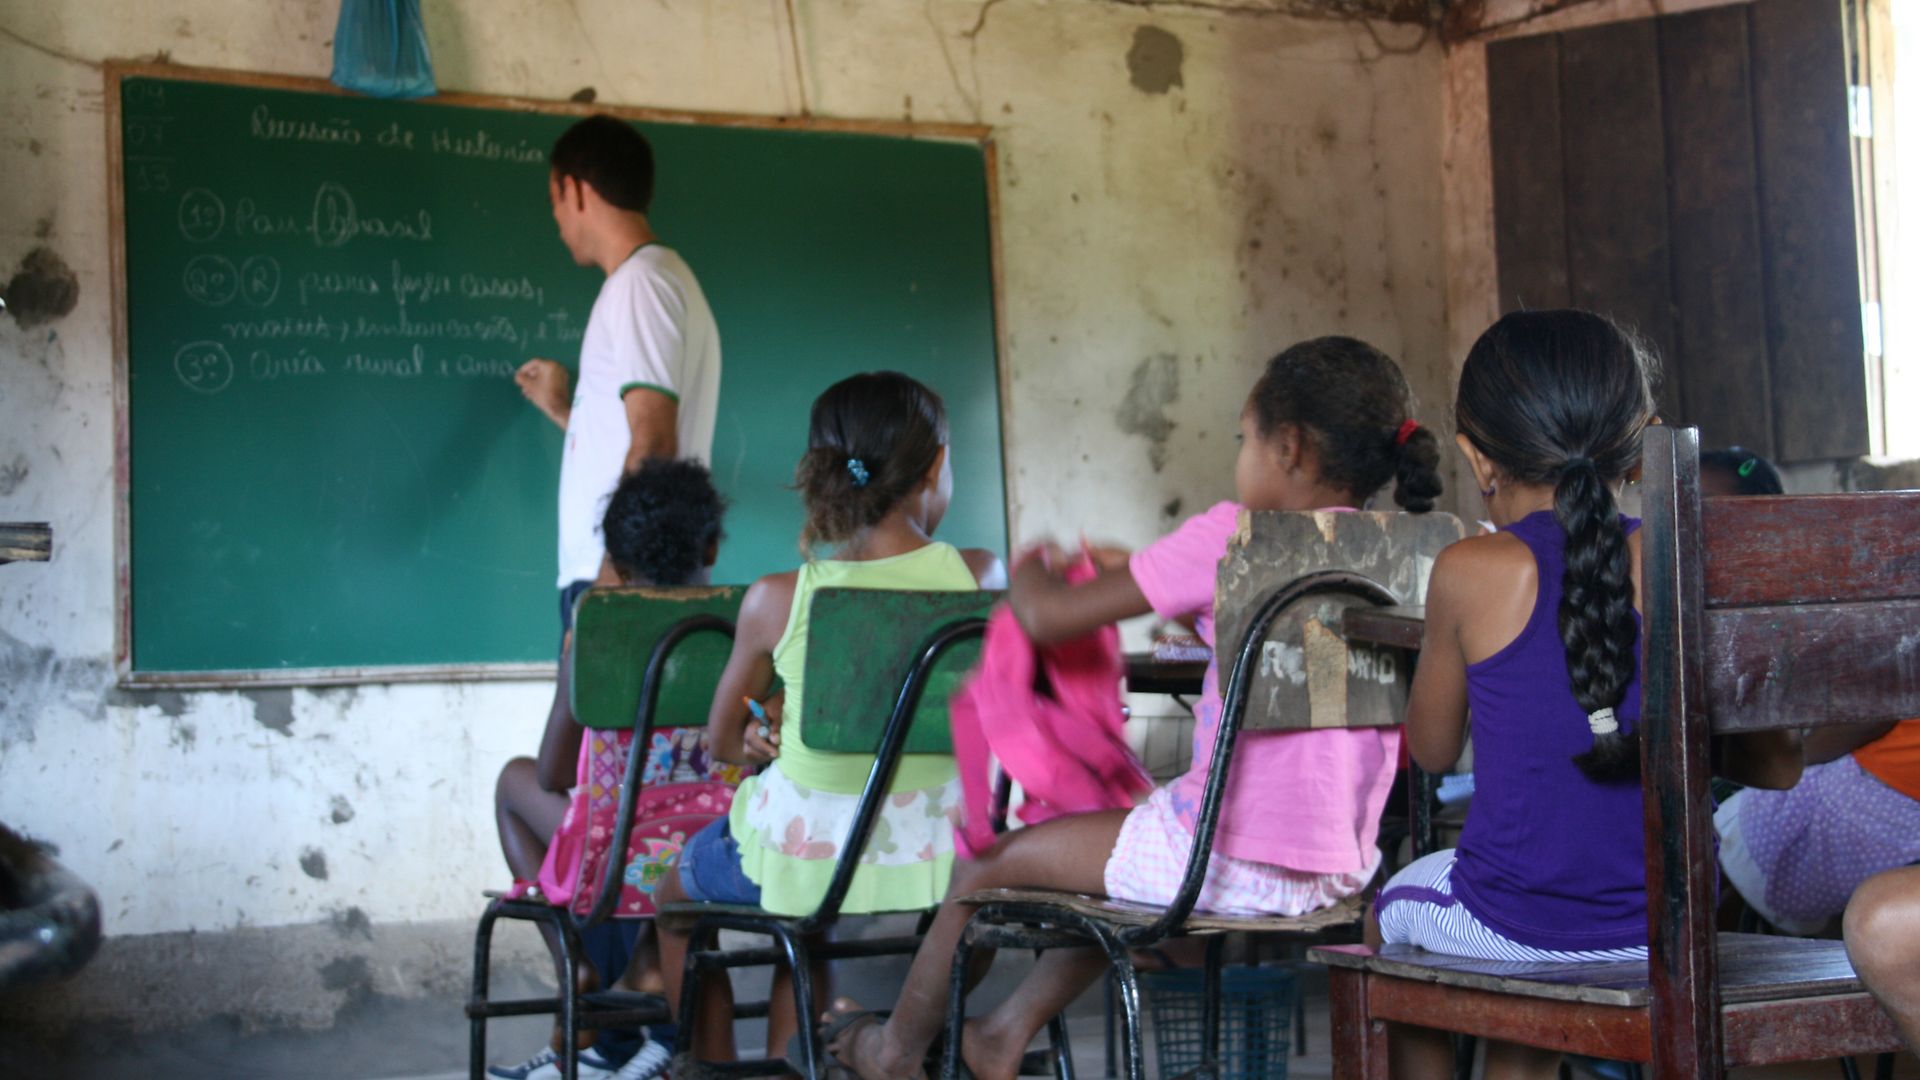 Kinder im Klassenzimmer